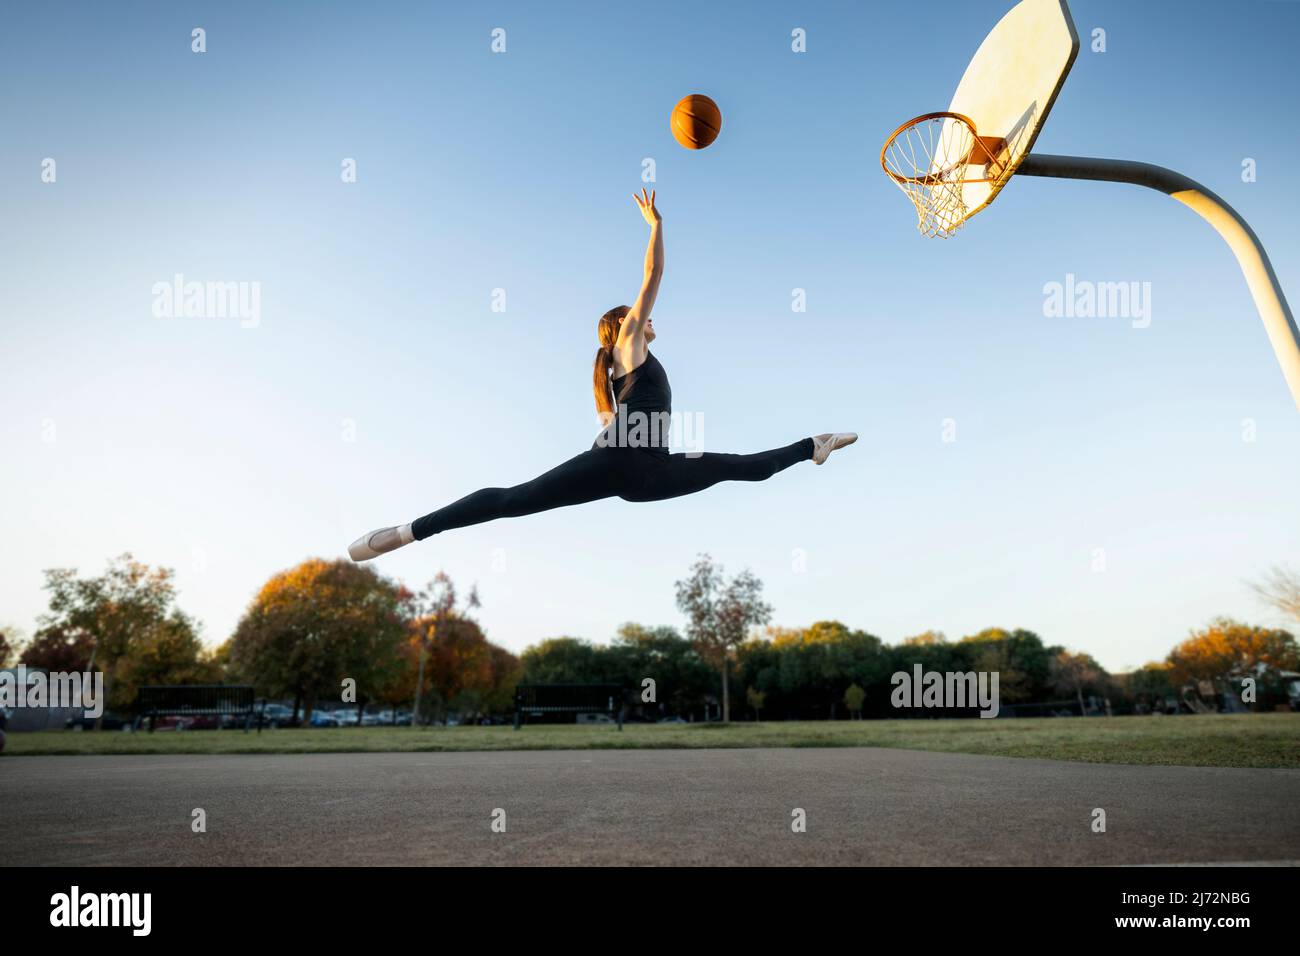 Female ballet dancer shooting baskets on an outdoor Basketball court Stock Photo